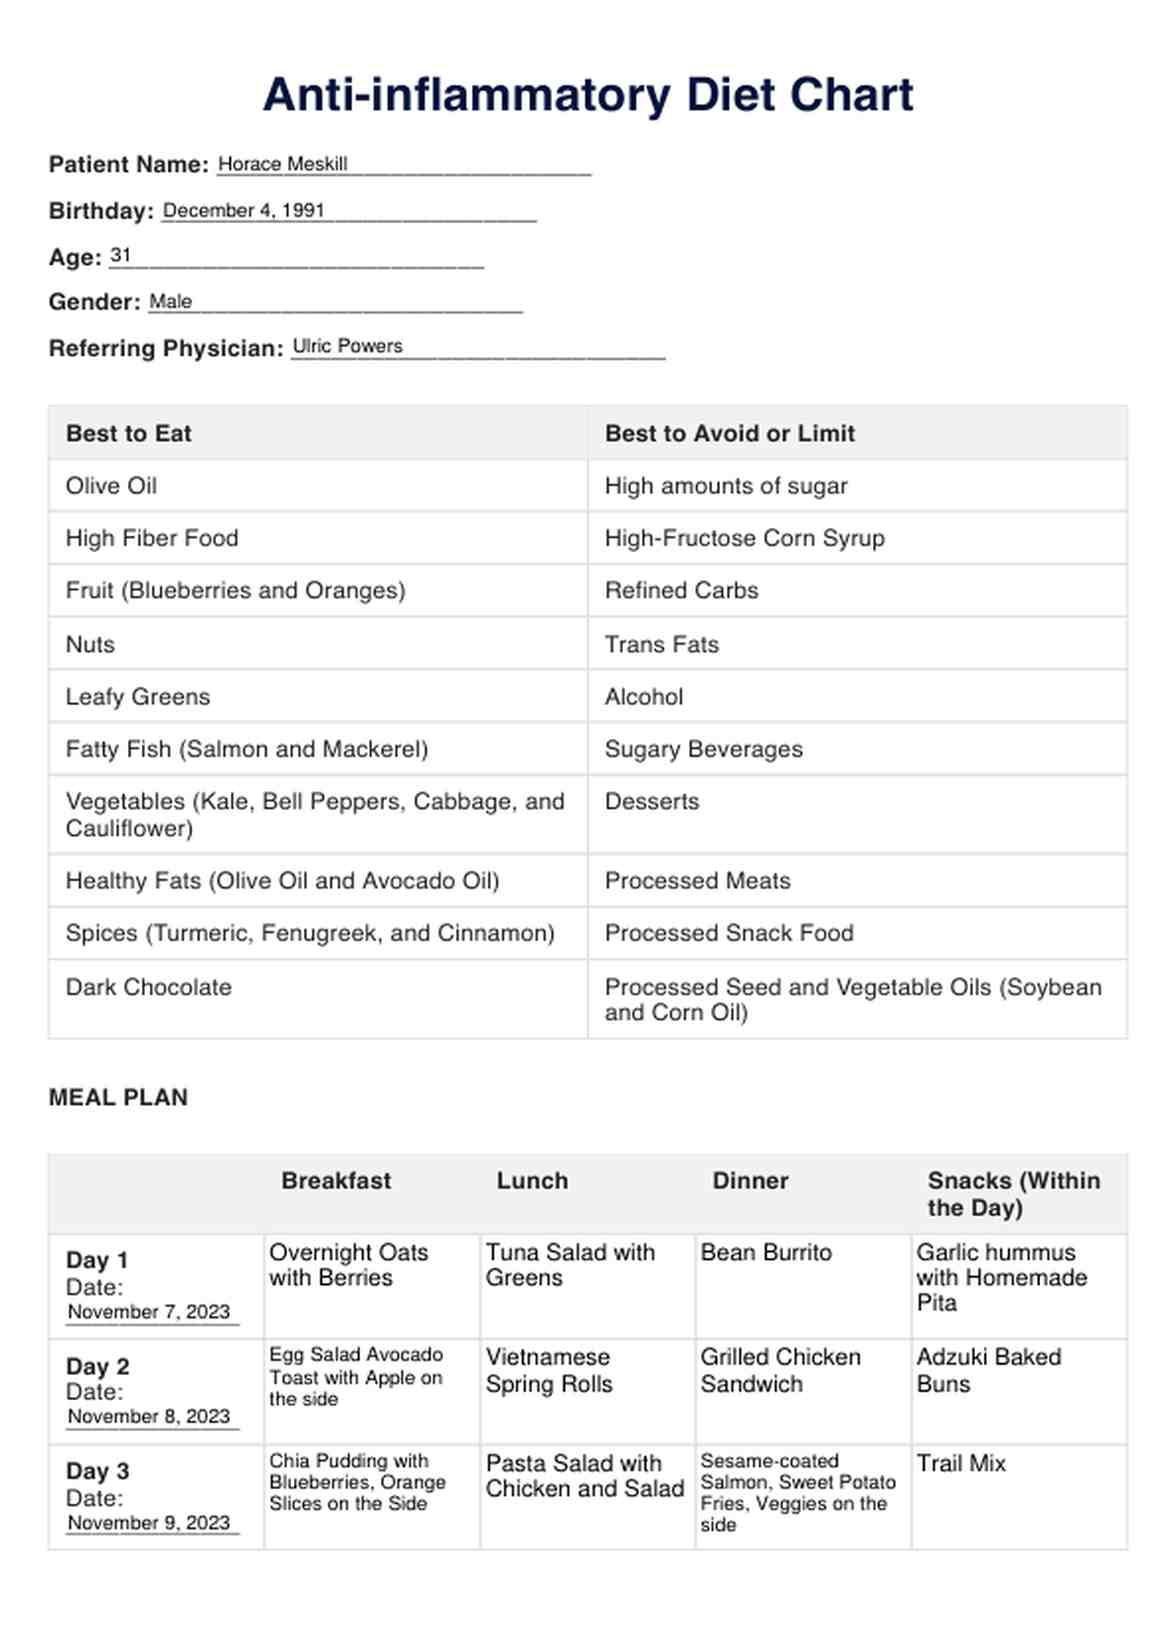 Anti-Inflammatory Diet Chart PDF Example